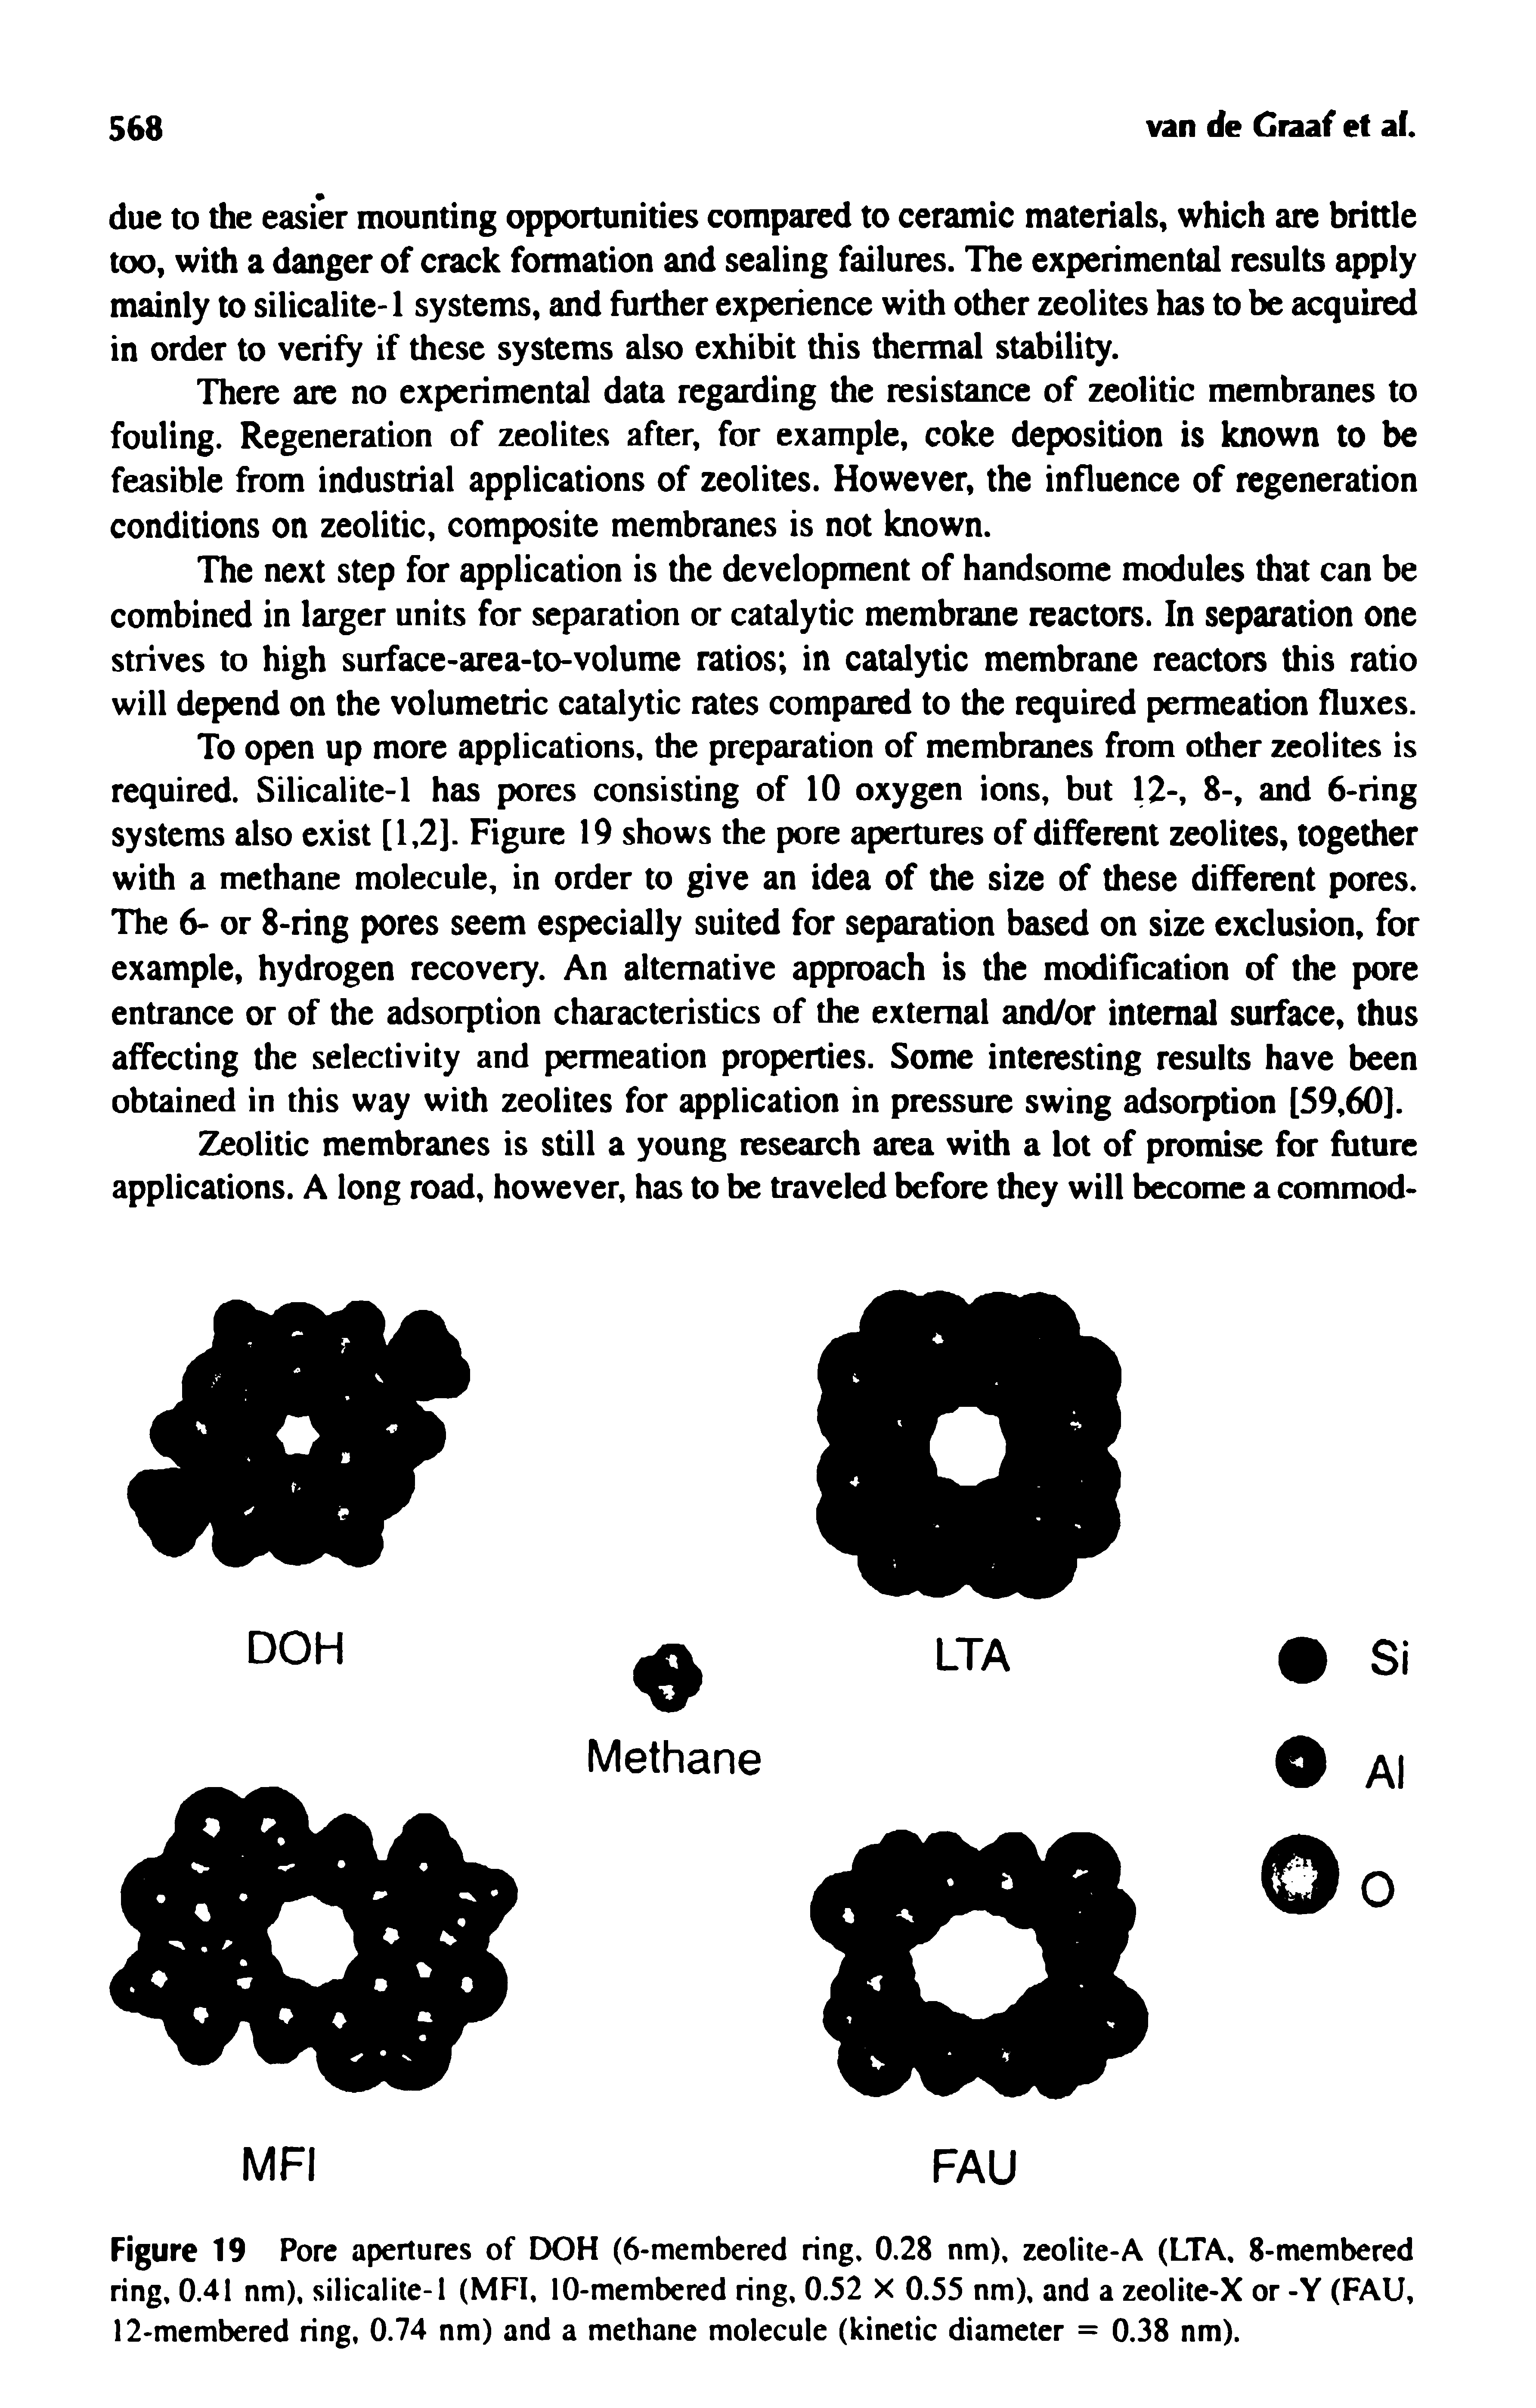 Figure 19 Pore apertures of DOH (6-membered ring. 0.28 nm), zeolite-A (LTA, 8-membered ring, 0.41 nm), silicalite-1 (MFI, 10-membered ring, 0.52 X 0.55 nm), and a zeolite-X or -Y (FAU, 12-membered ring, 0.74 nm) and a methane molecule (kinetic diameter = 0.38 nm).